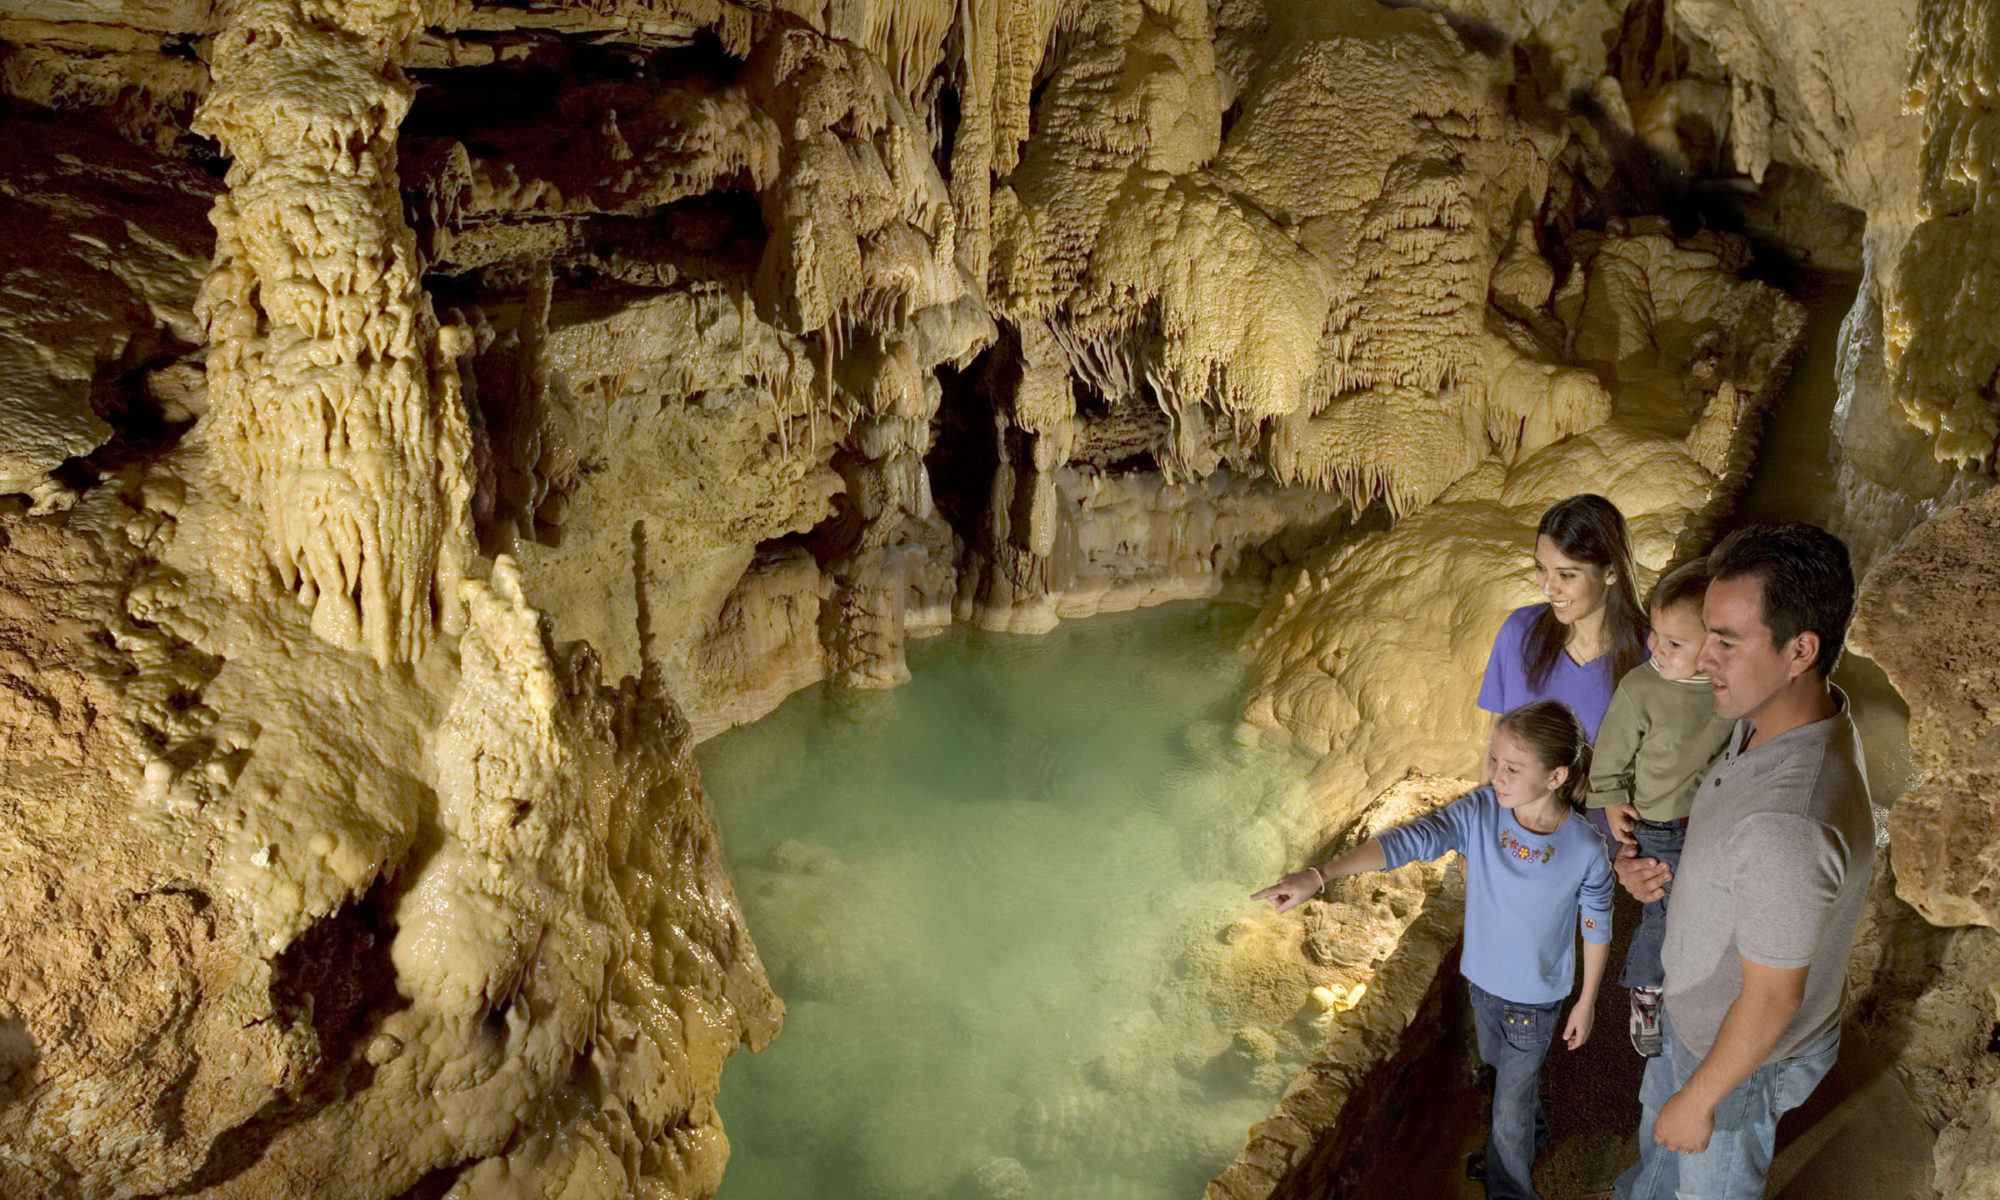 Visitors enjoying the Emerald Lake formation in Natural Bridge Caves